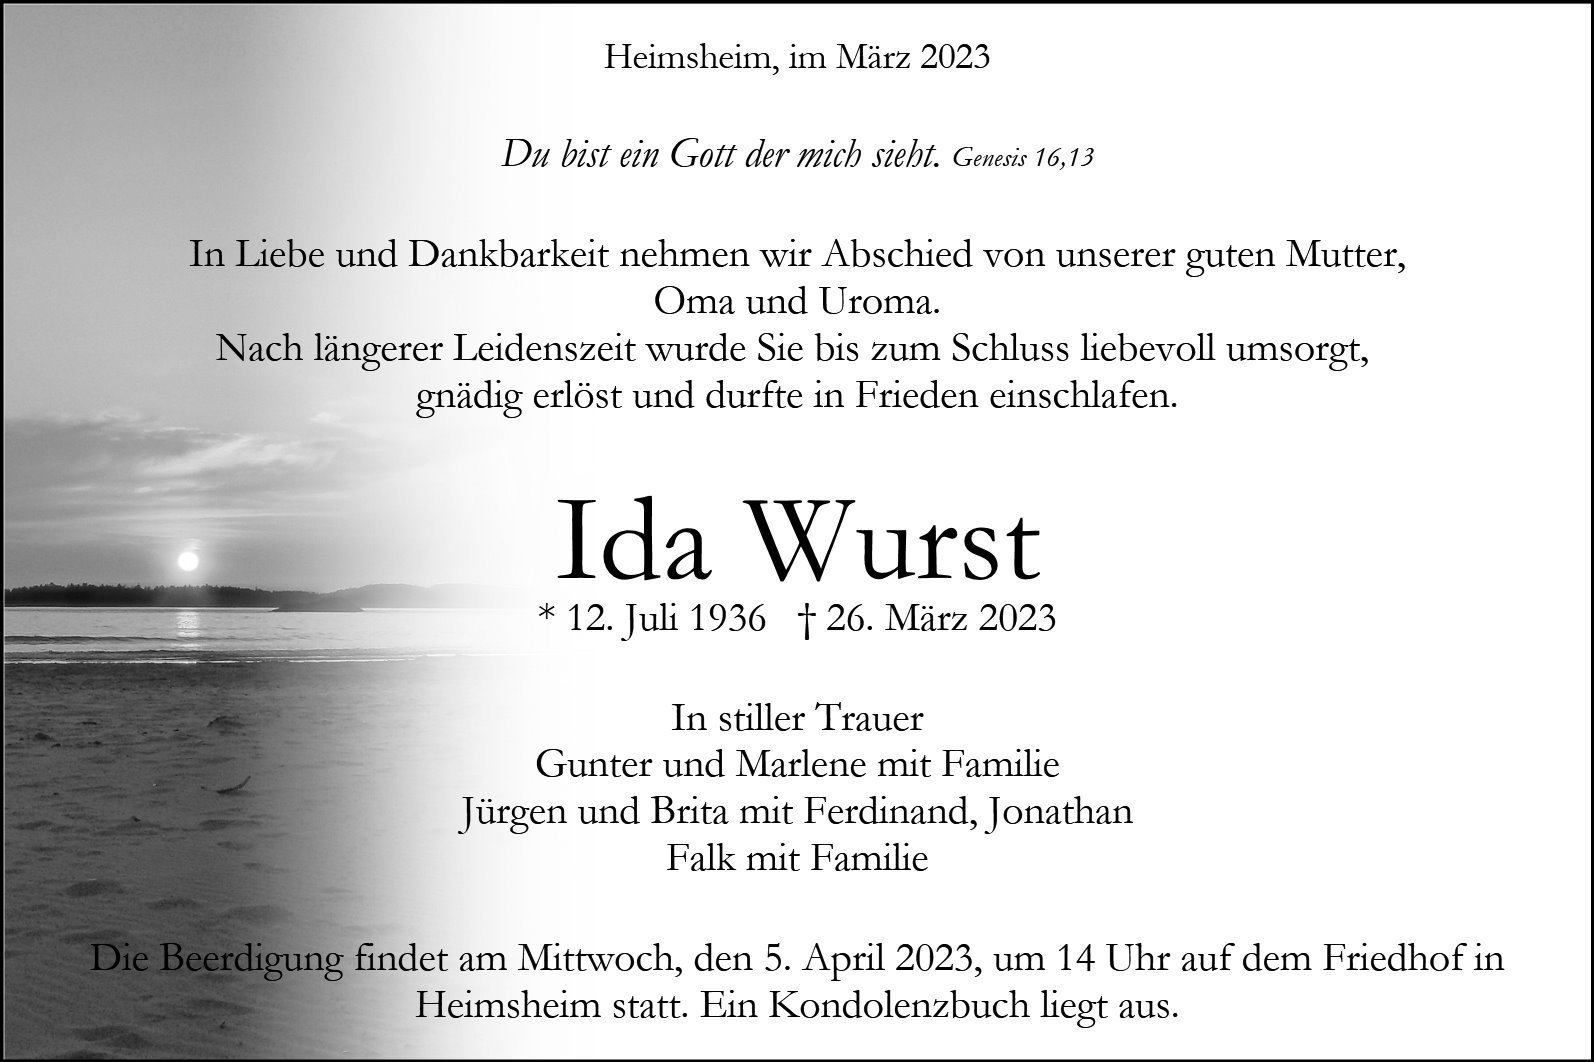 Ida Wurst